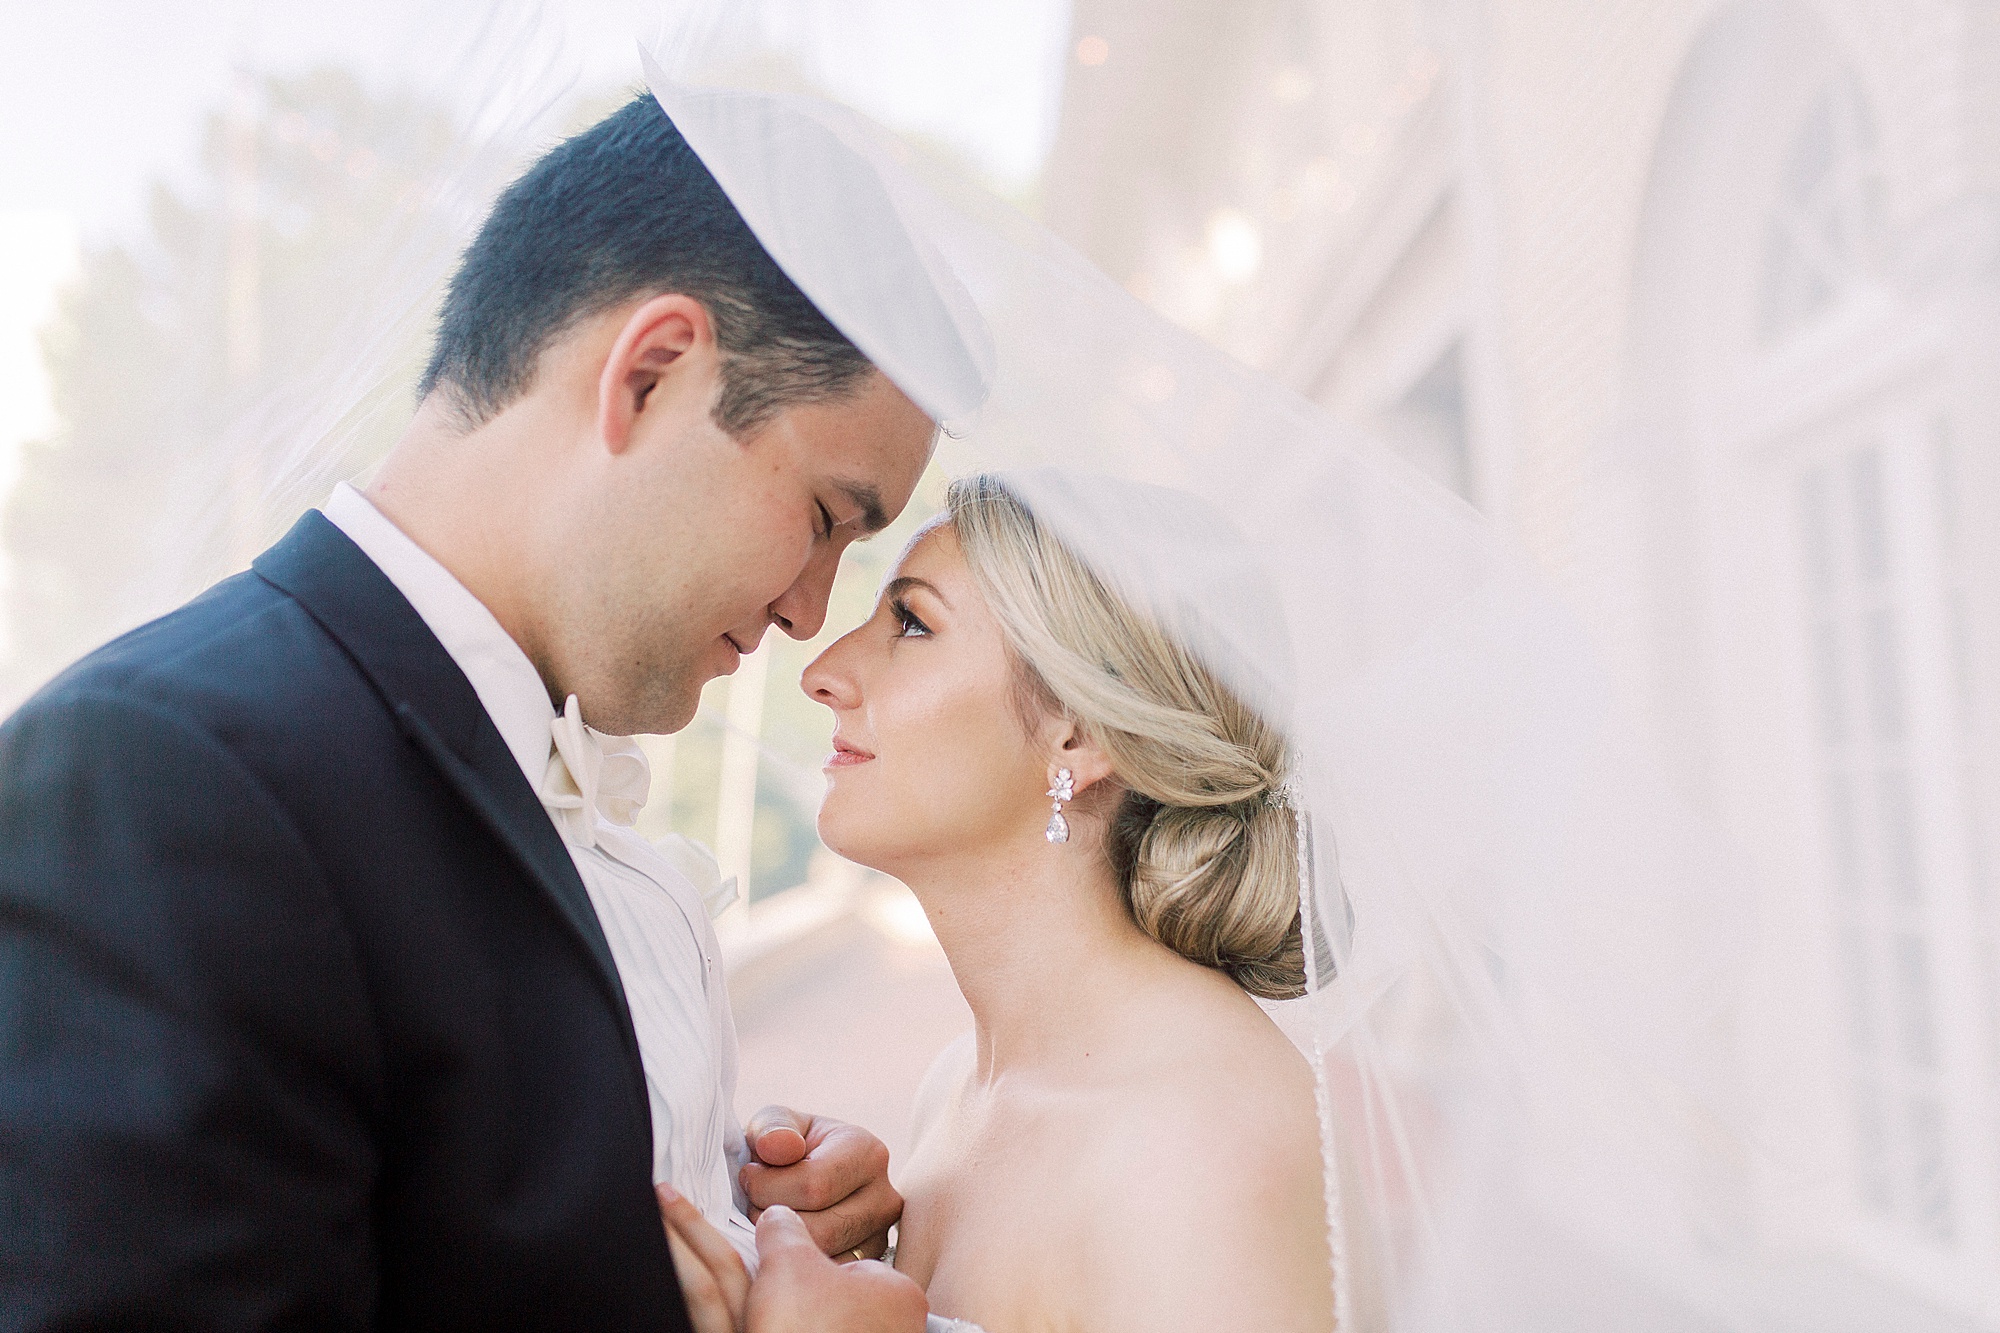 newlyweds pose under veil during wedding photos